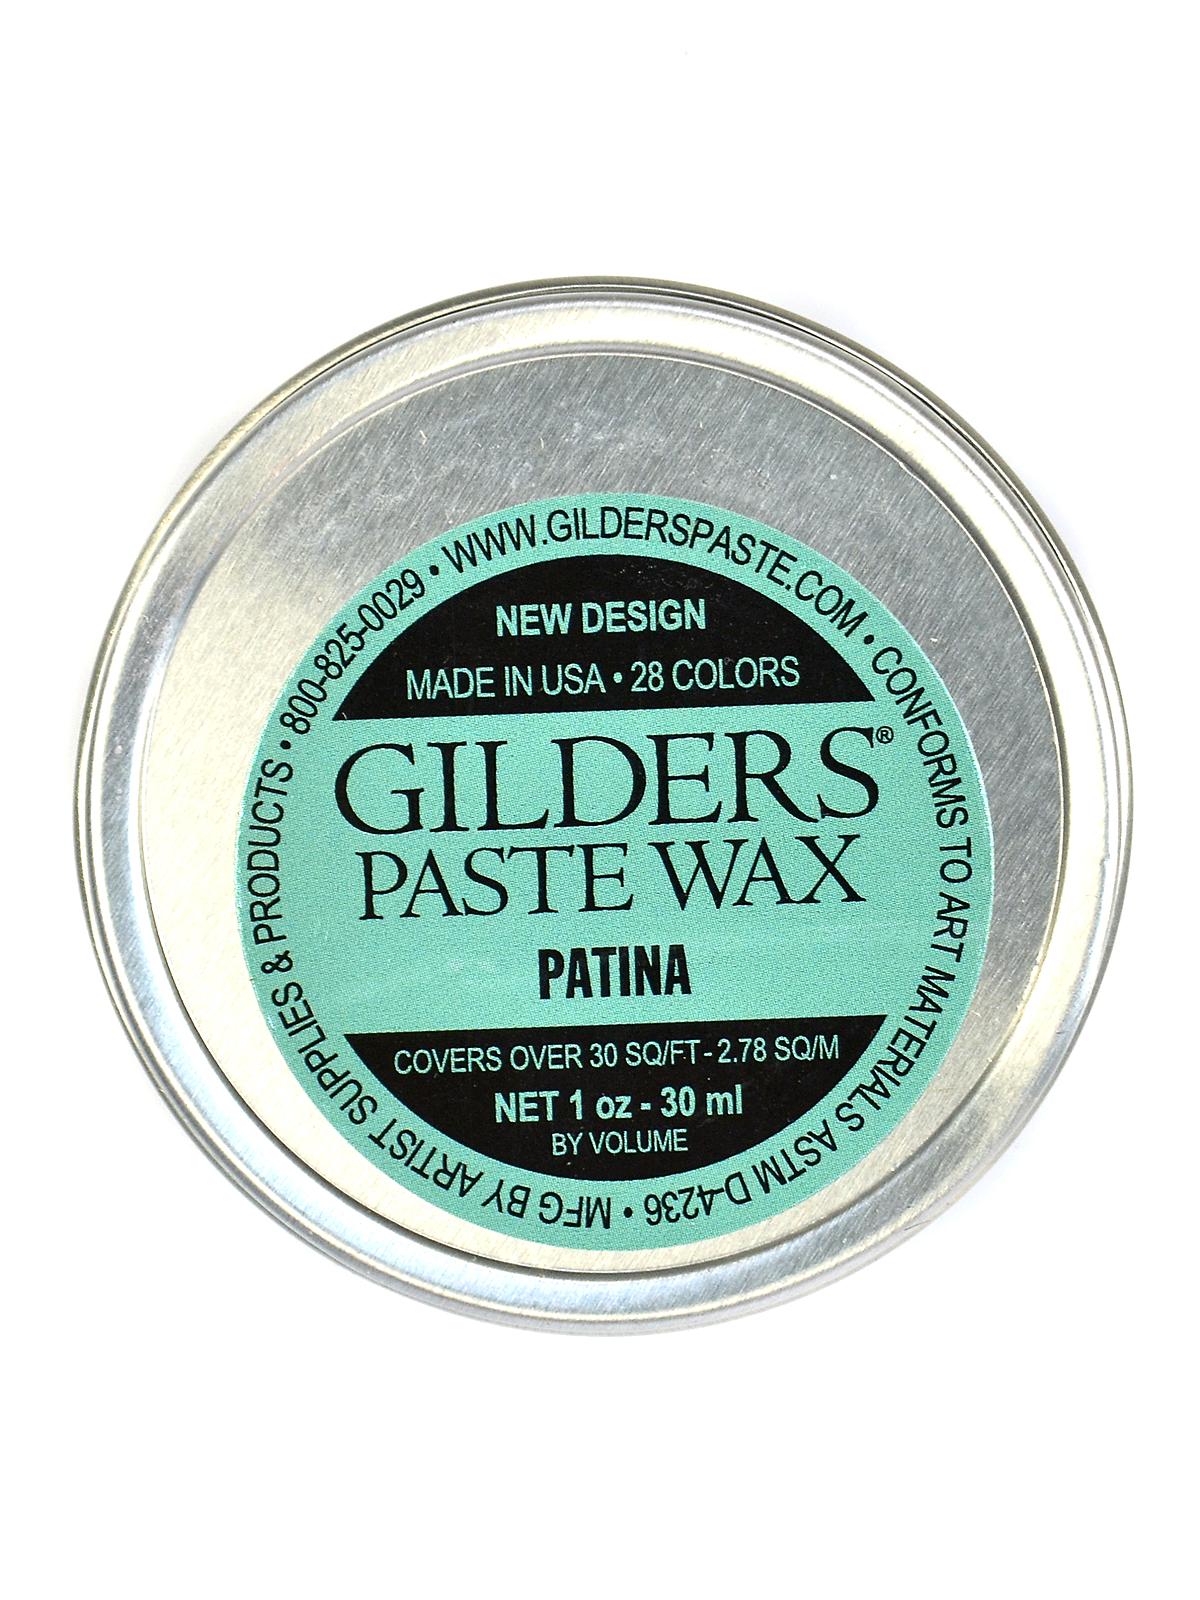 Gilder's Paste Wax Patina 1 Oz. Tin